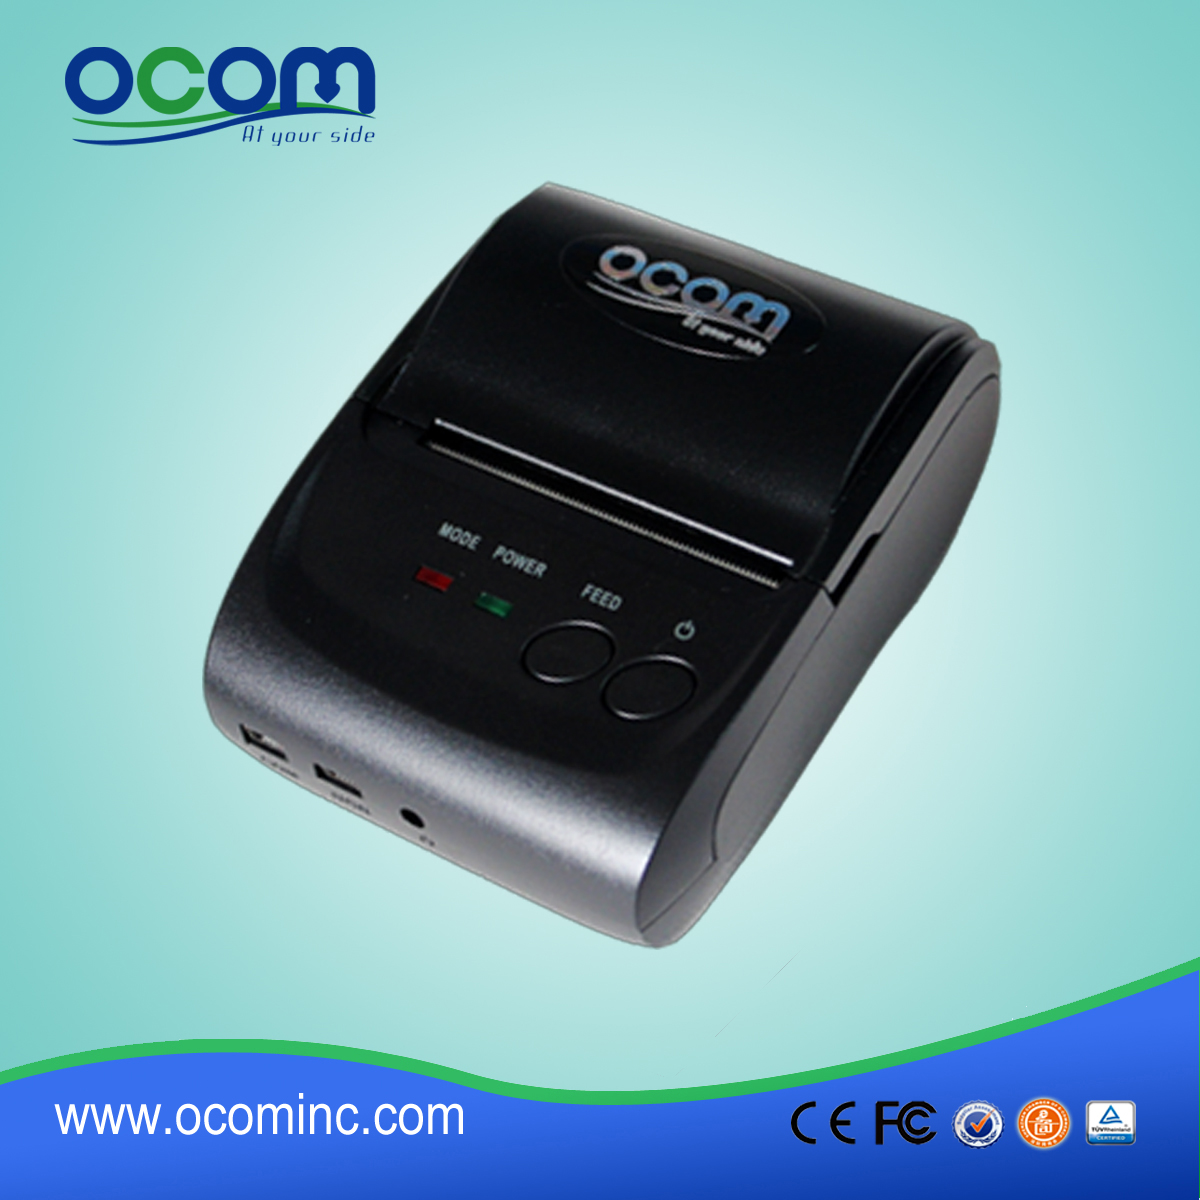 OCPP-M05: надежный термопринтер для Android ККМ, QR Code термопринтер